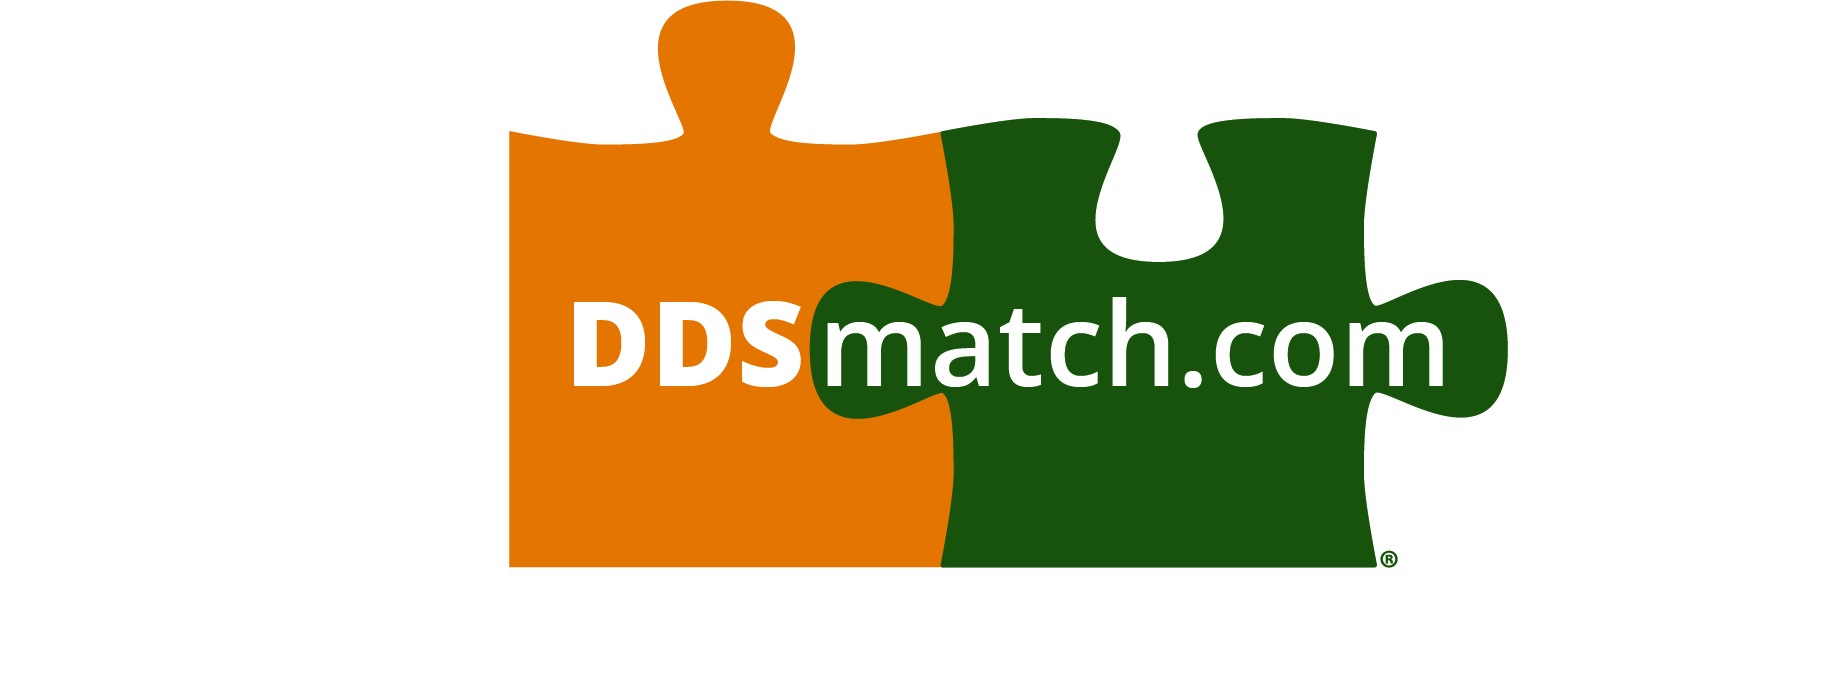 ddsmatch.com - Jon Voeller Logo